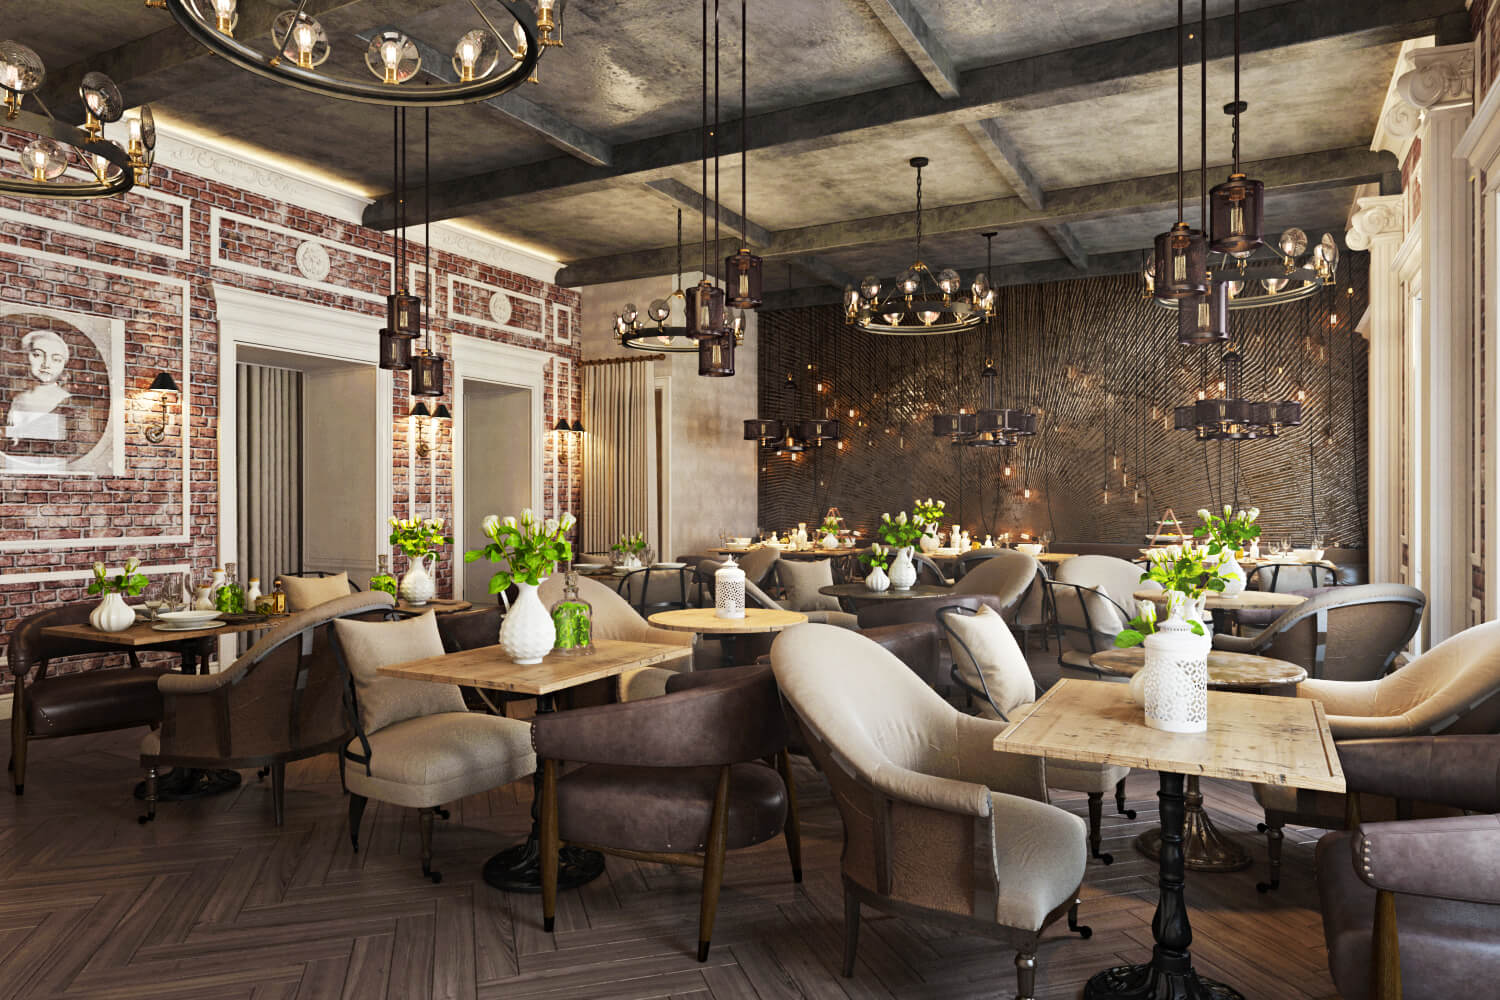 Stunning Restaurant Interior Design the Chic of Original ...